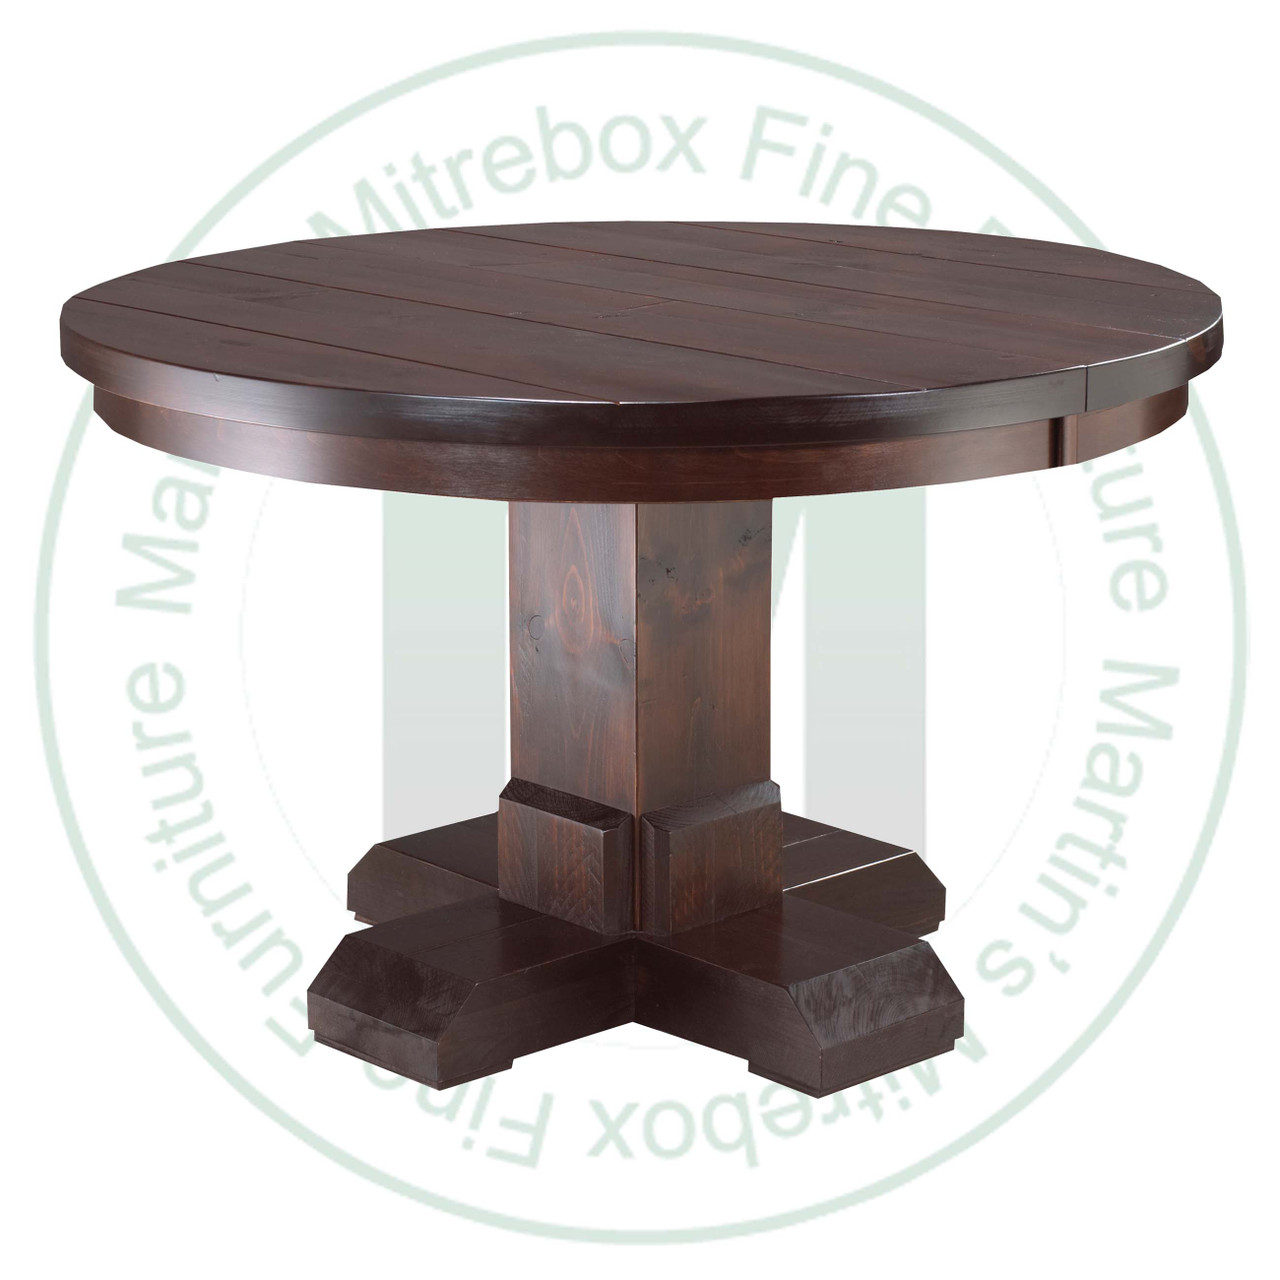 Maple Shrewsbury Single Pedestal Table 60''D x 60''W x 30''H With 1 - 12'' Leaf Table